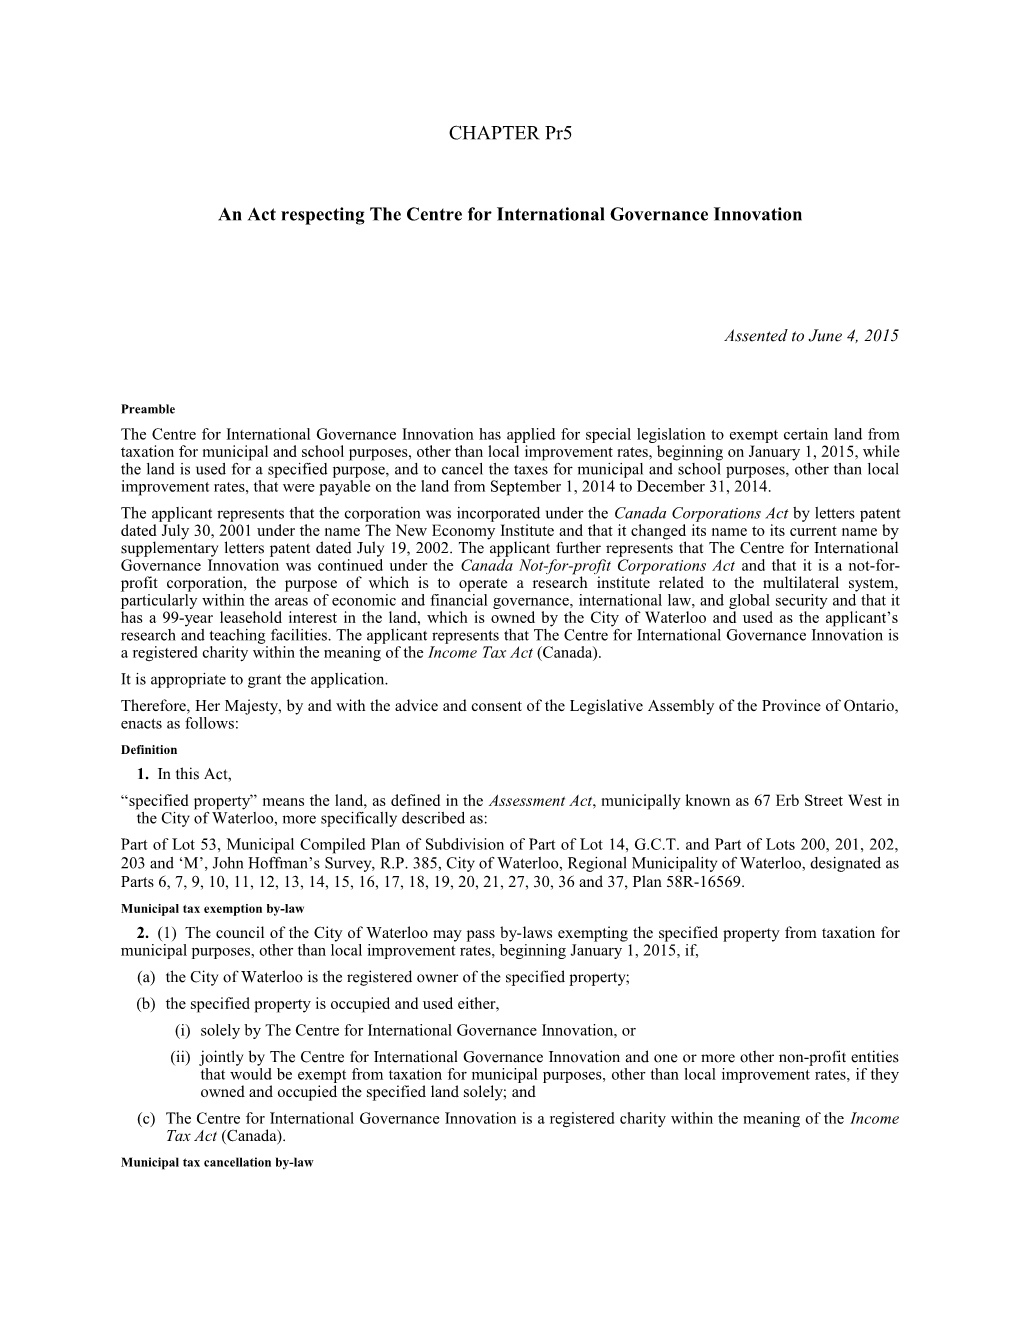 Centre for International Governance Innovation Act (Tax Relief), 2015, S.O. 2015, C. Pr5